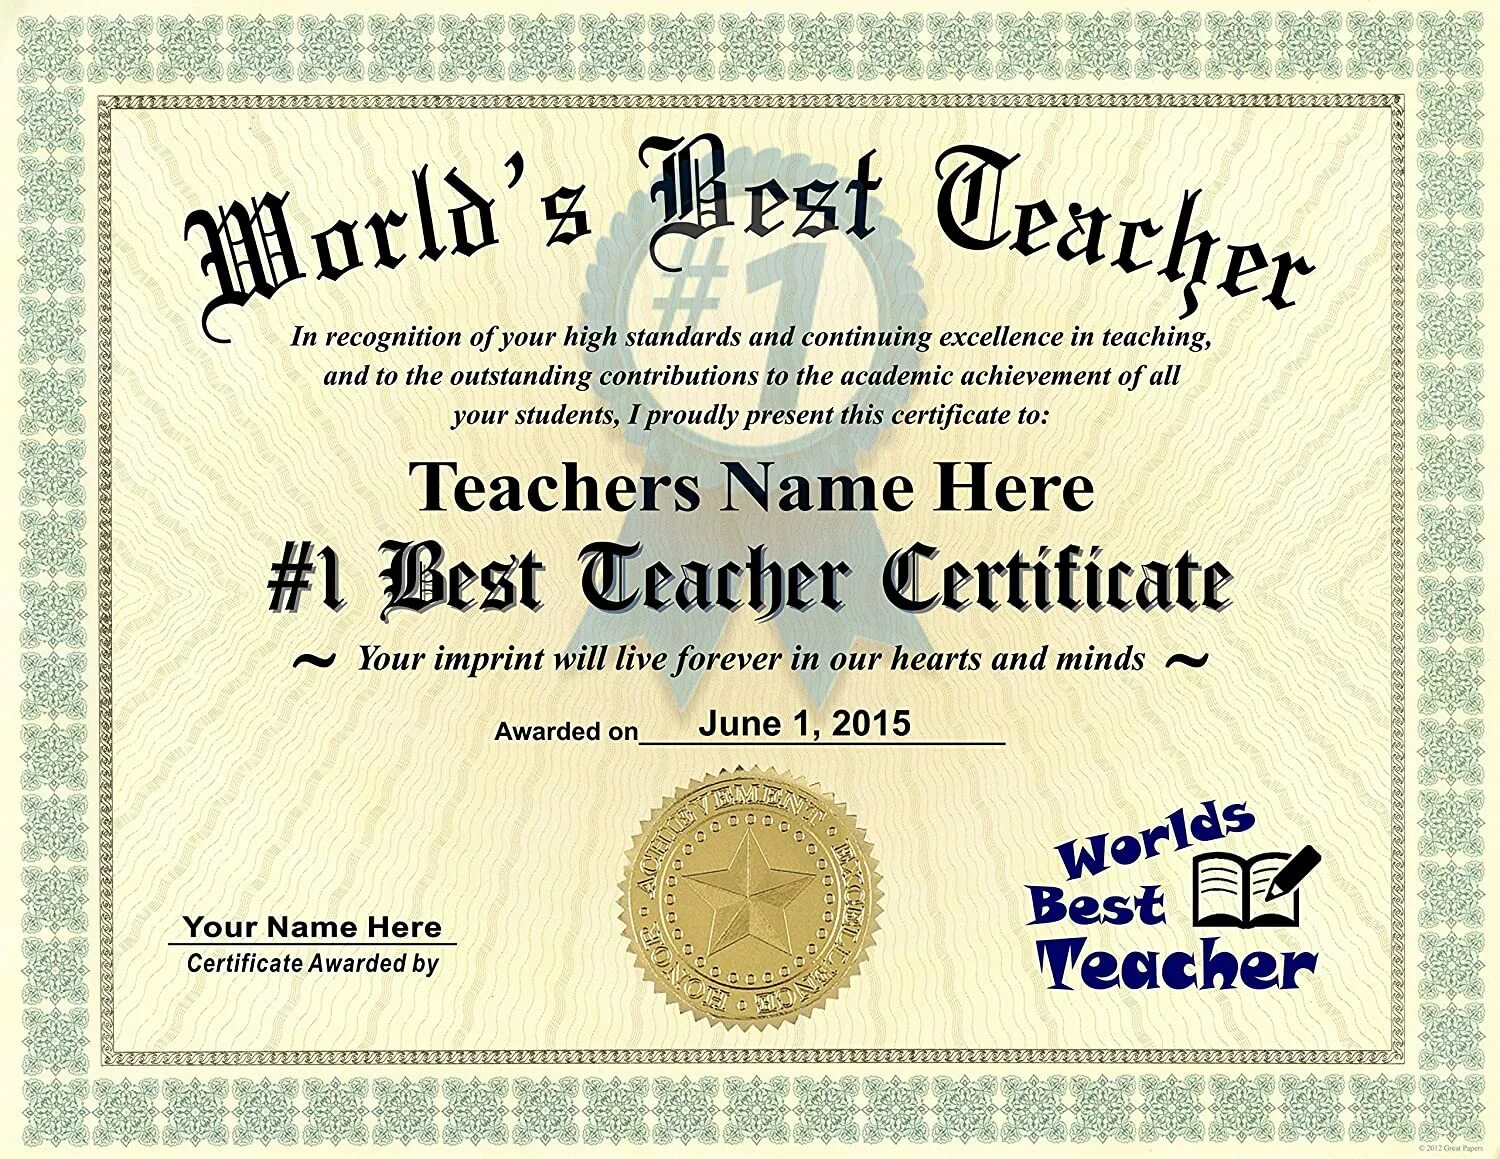 Teacher awards. Best teacher Certificate. Certificate учительница. Certificate Awarded best teacher. Award Certificate for teachers.